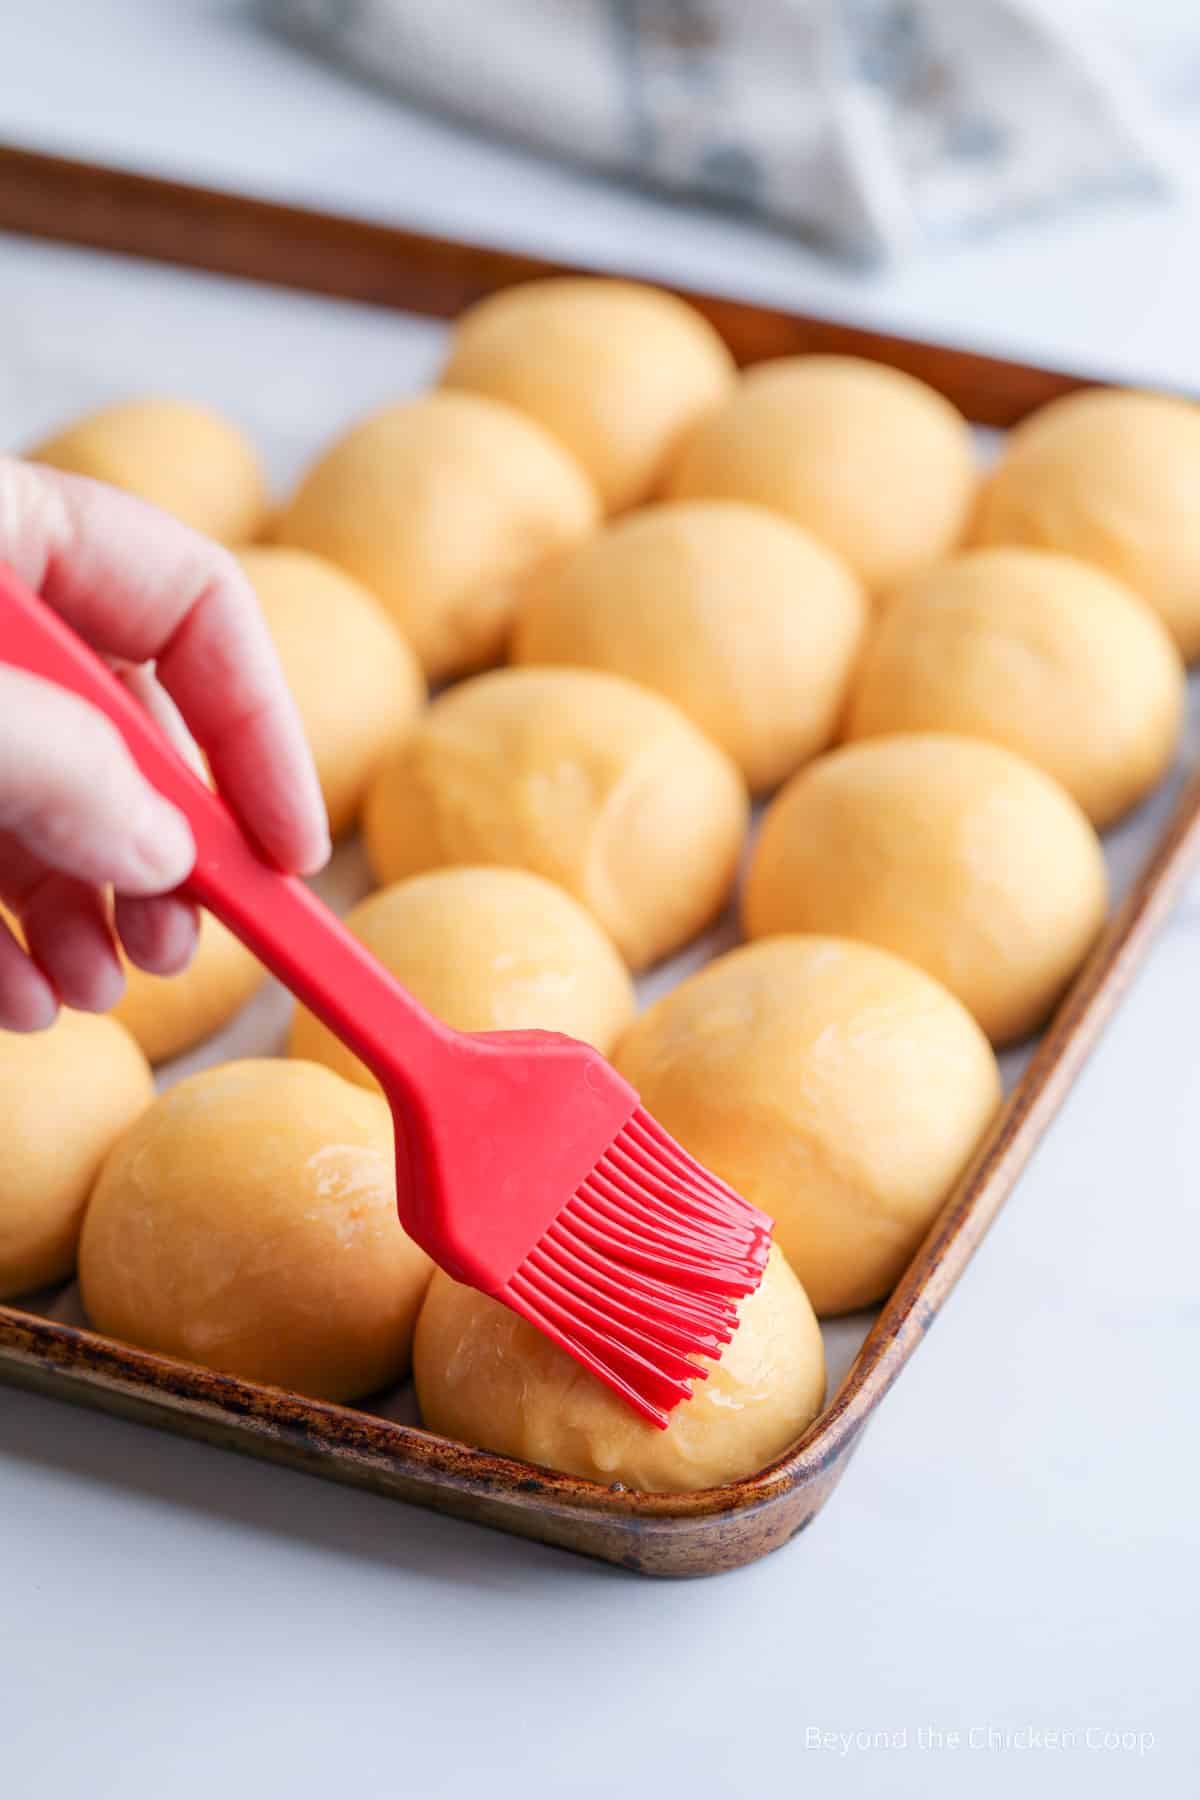 Brushing butter on unbaked rolls. 